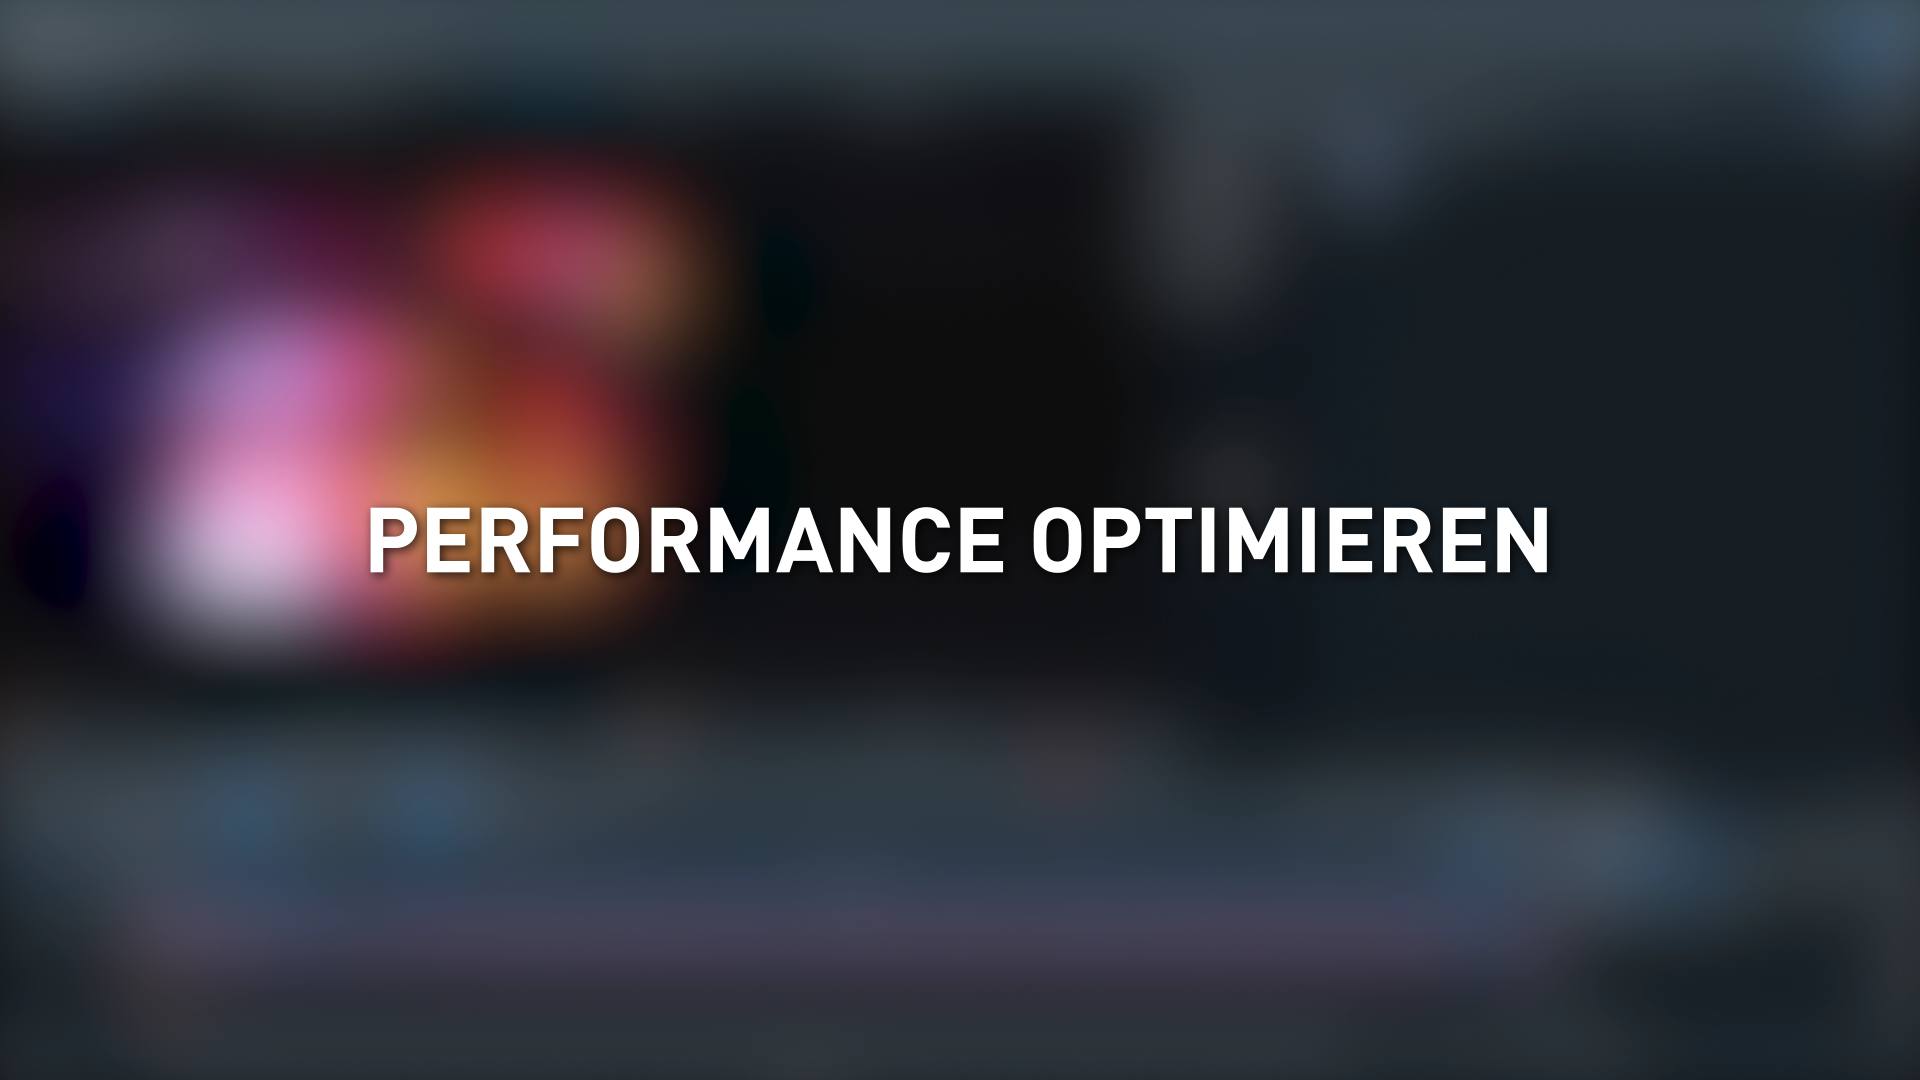 Performance optimieren